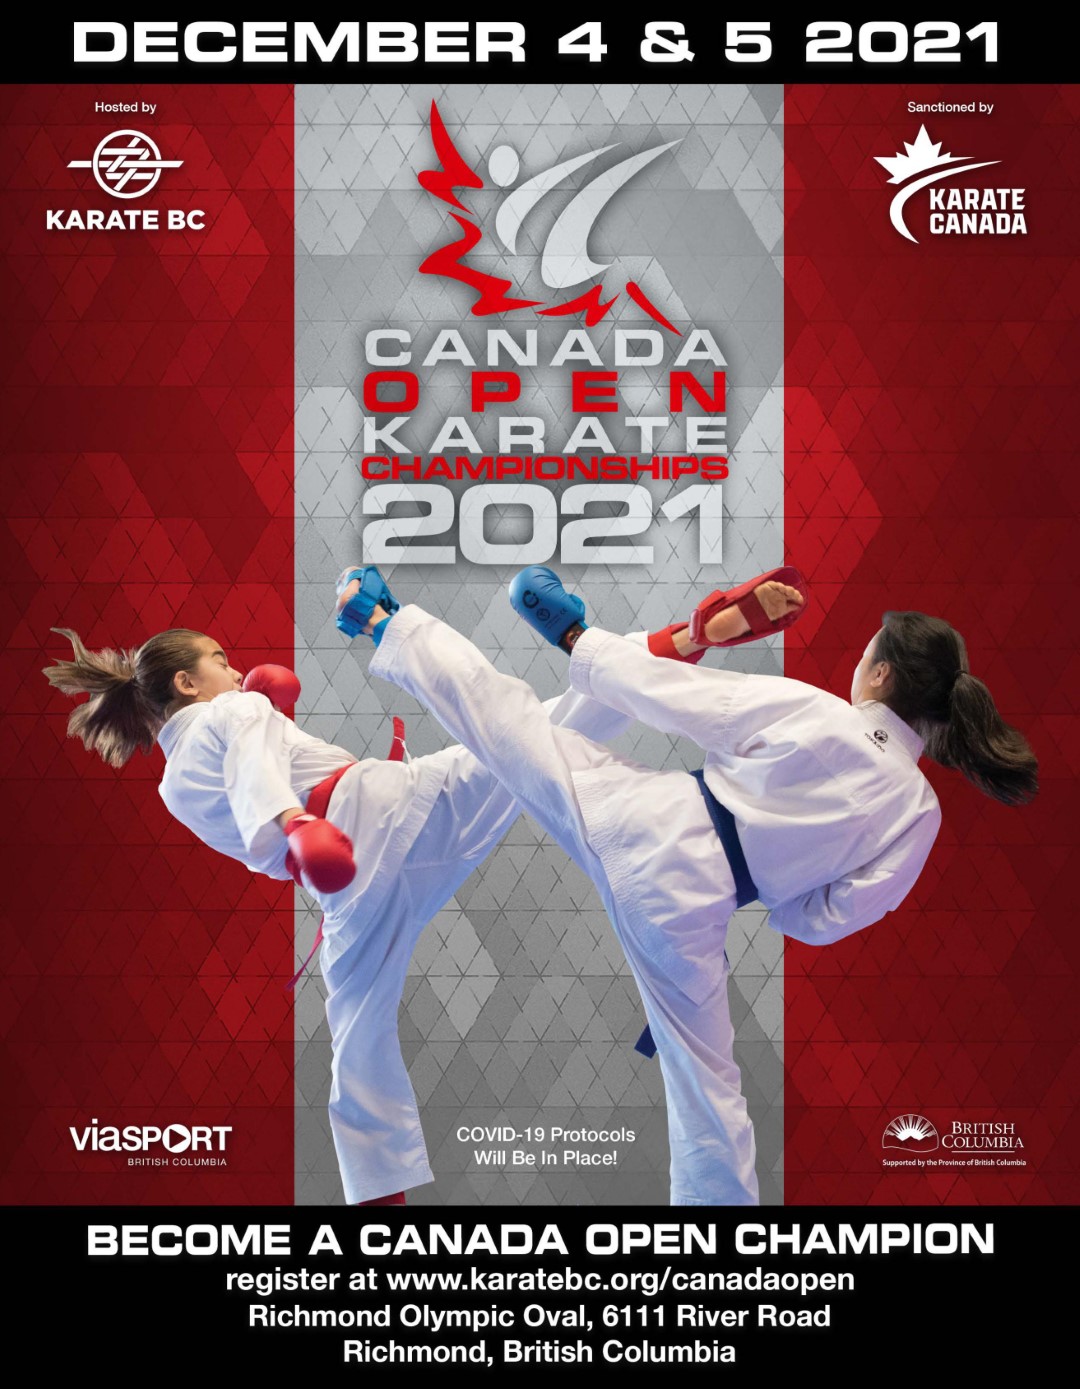 2021 Canada Open Karate Championships Karate BC